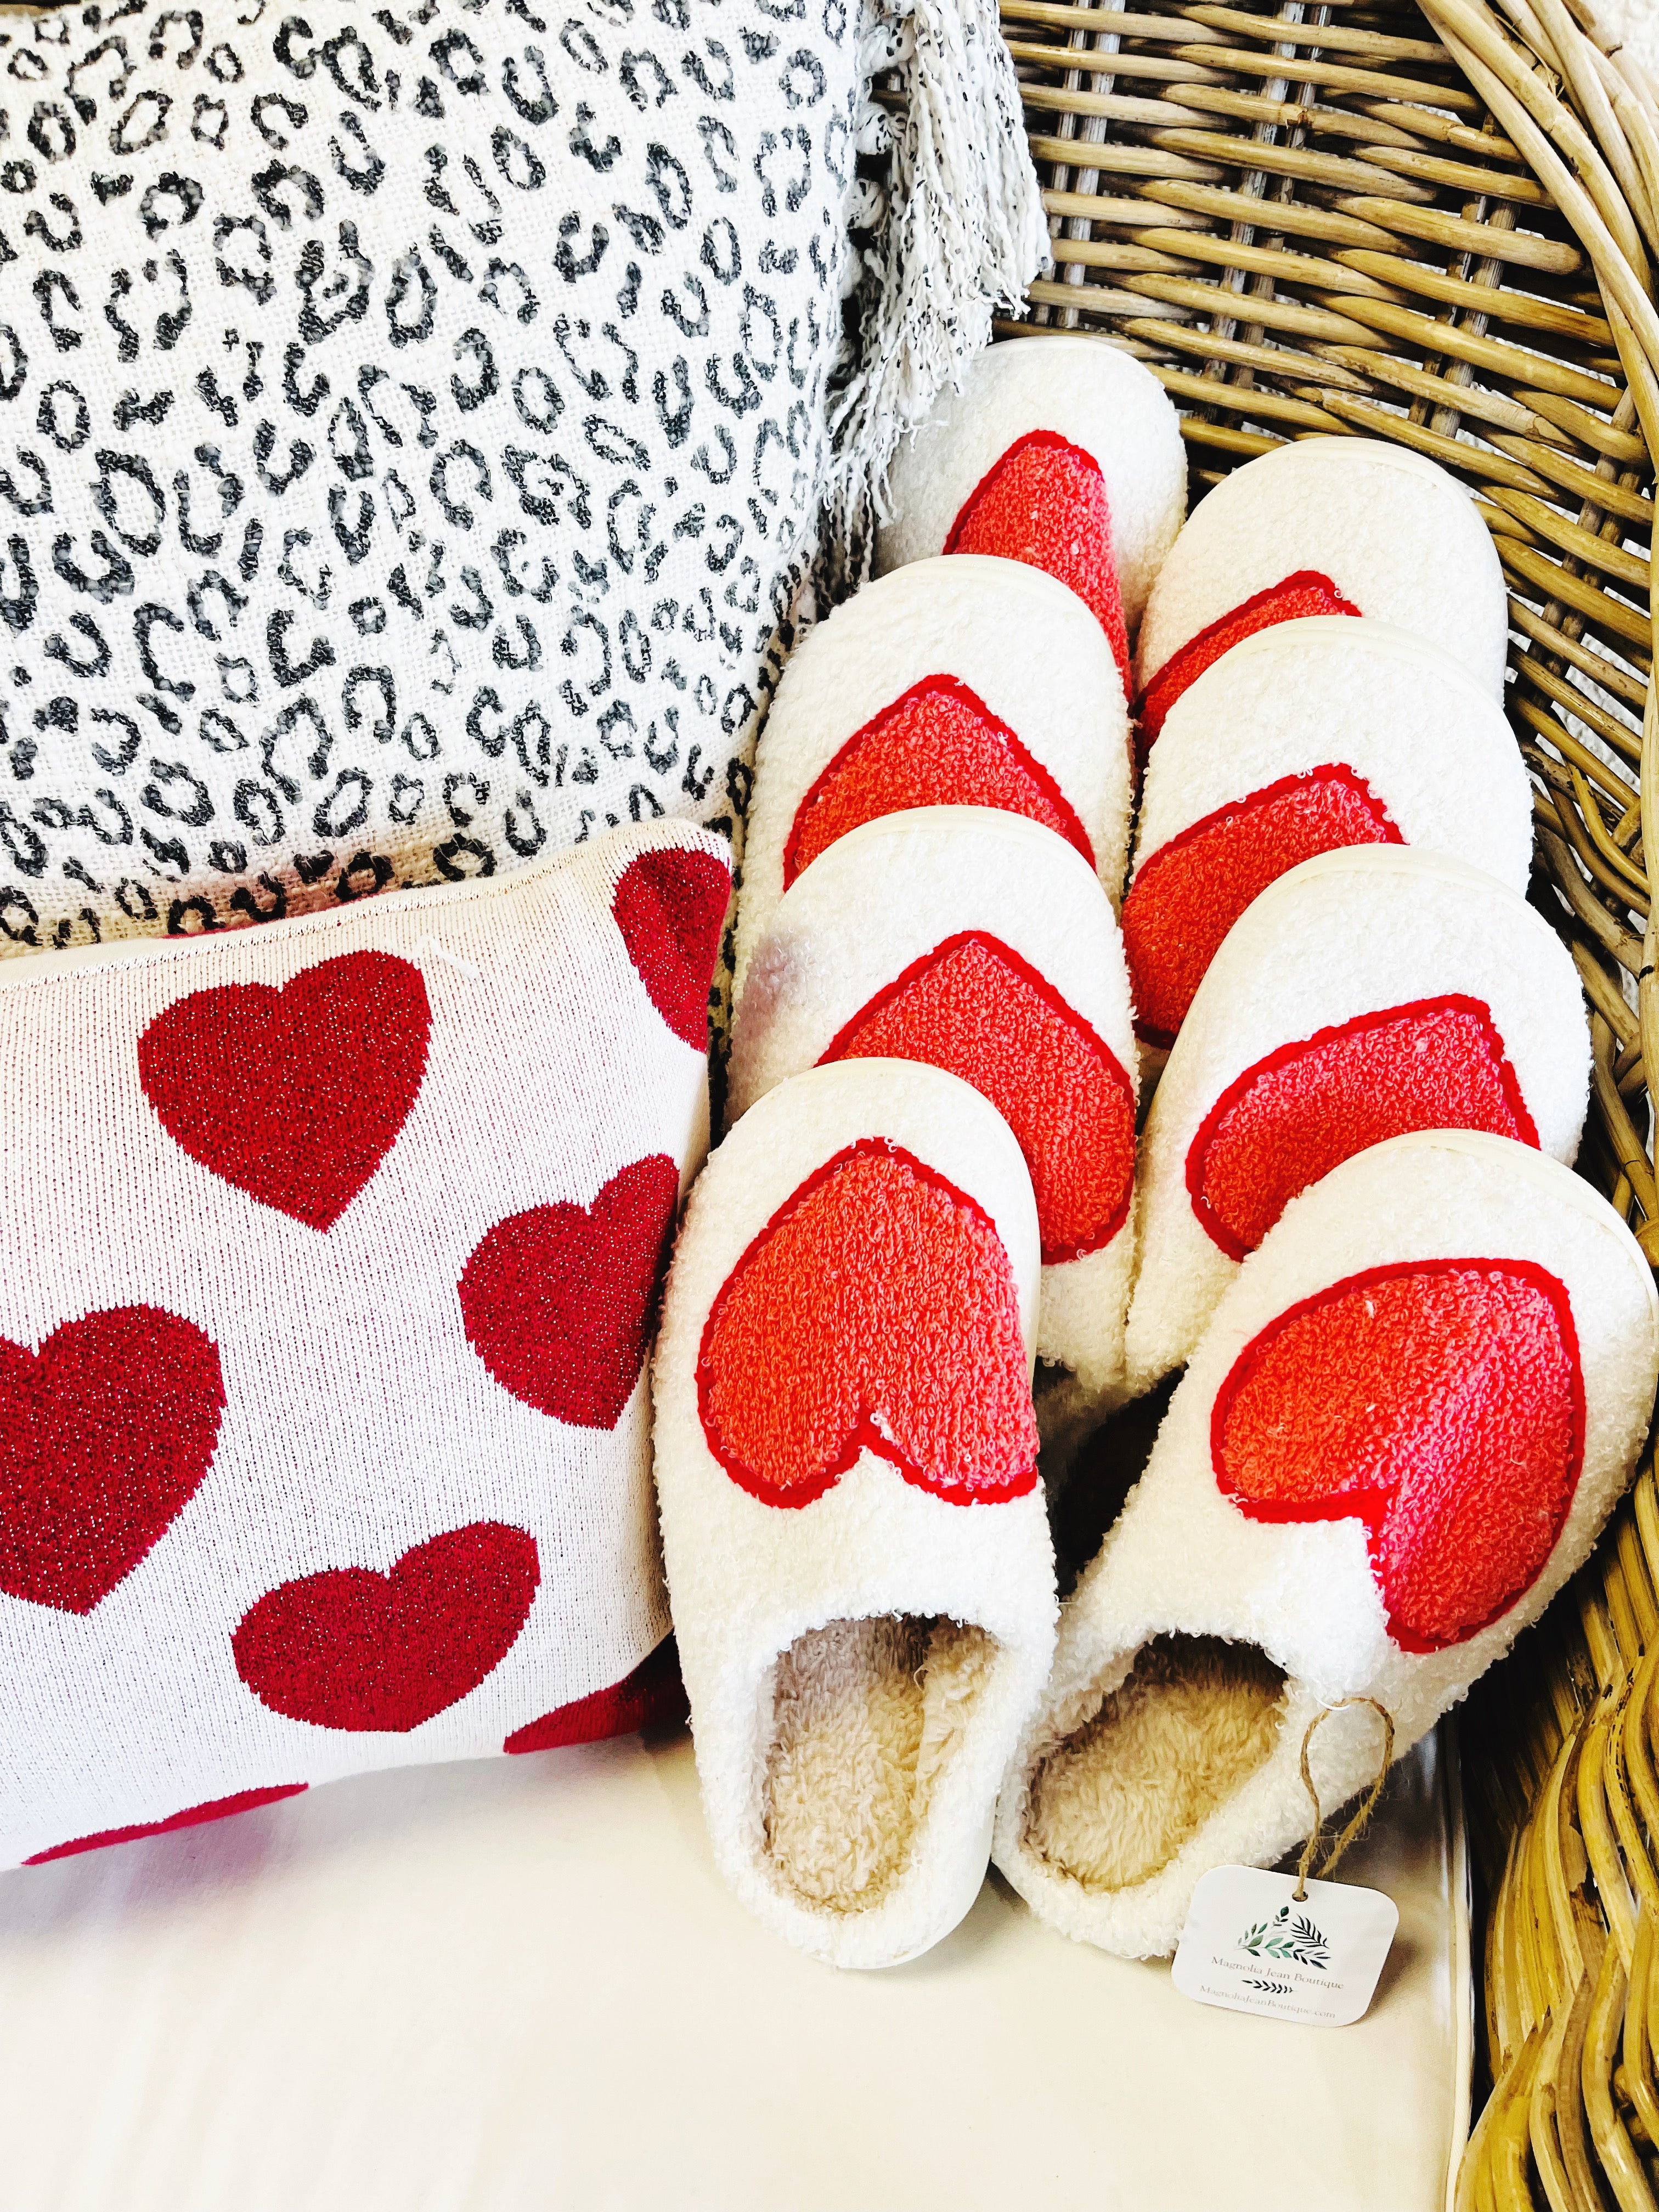 Valentine Heart Fleece Slippers